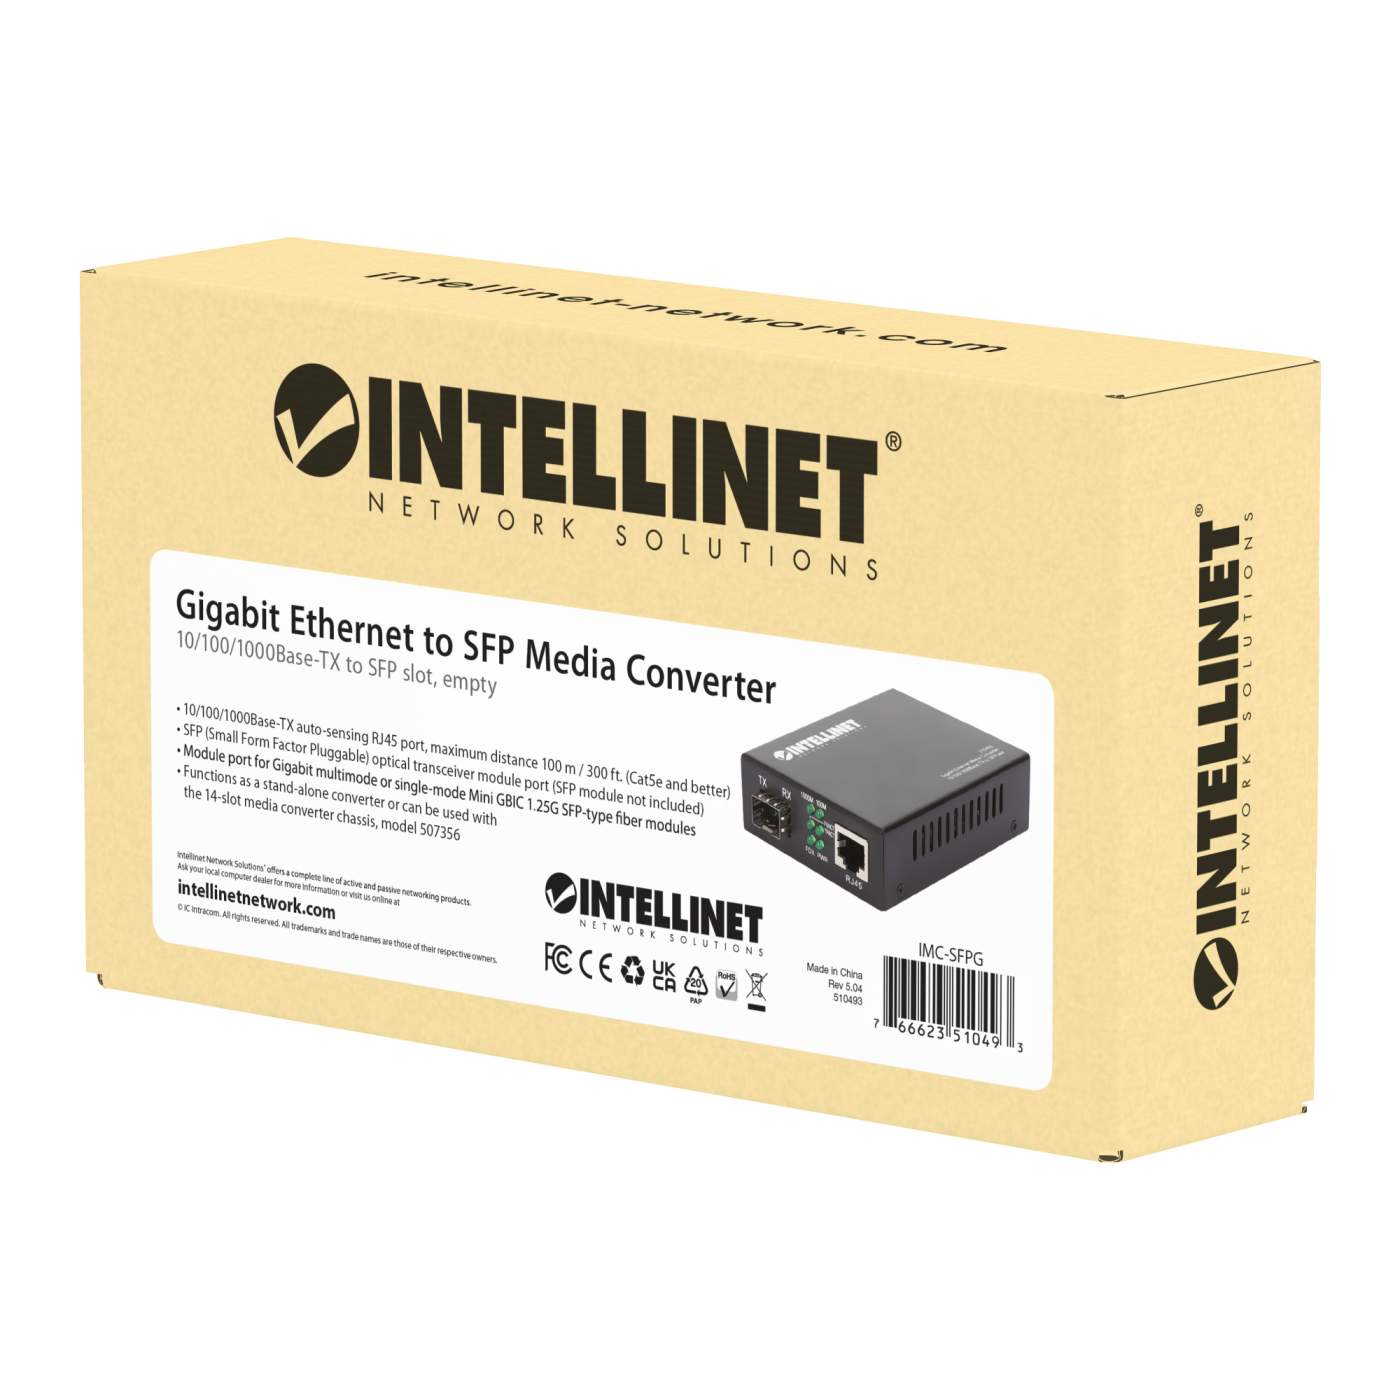 Gigabit Ethernet to SFP Media Converter Packaging Image 2